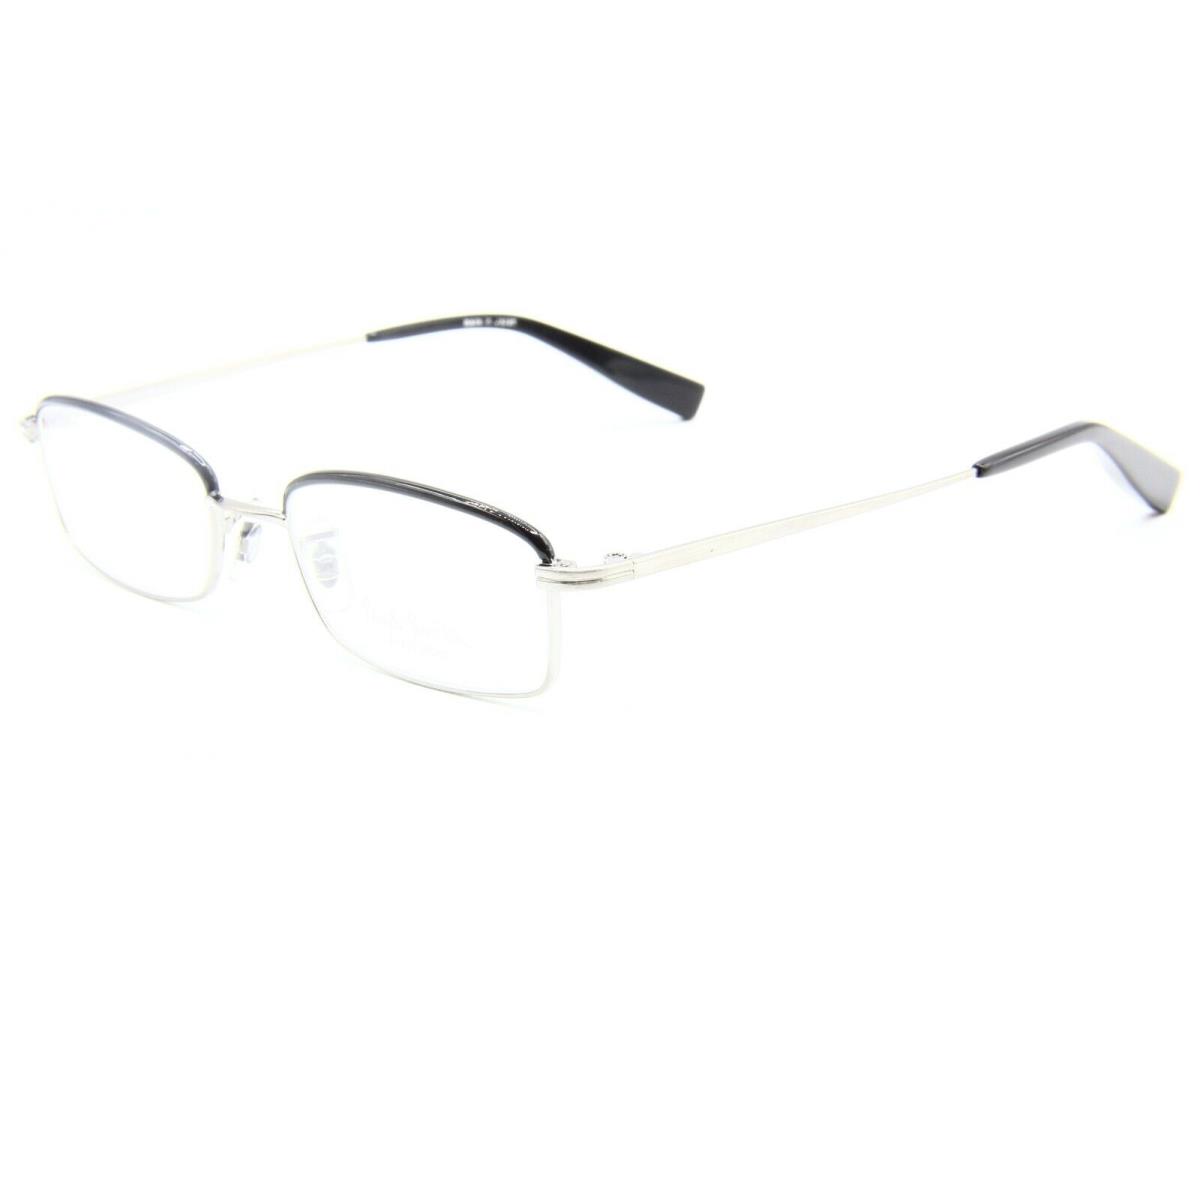 Paul Smith PS-1010 Ox/l Black Eyeglasses Frame RX 50-18